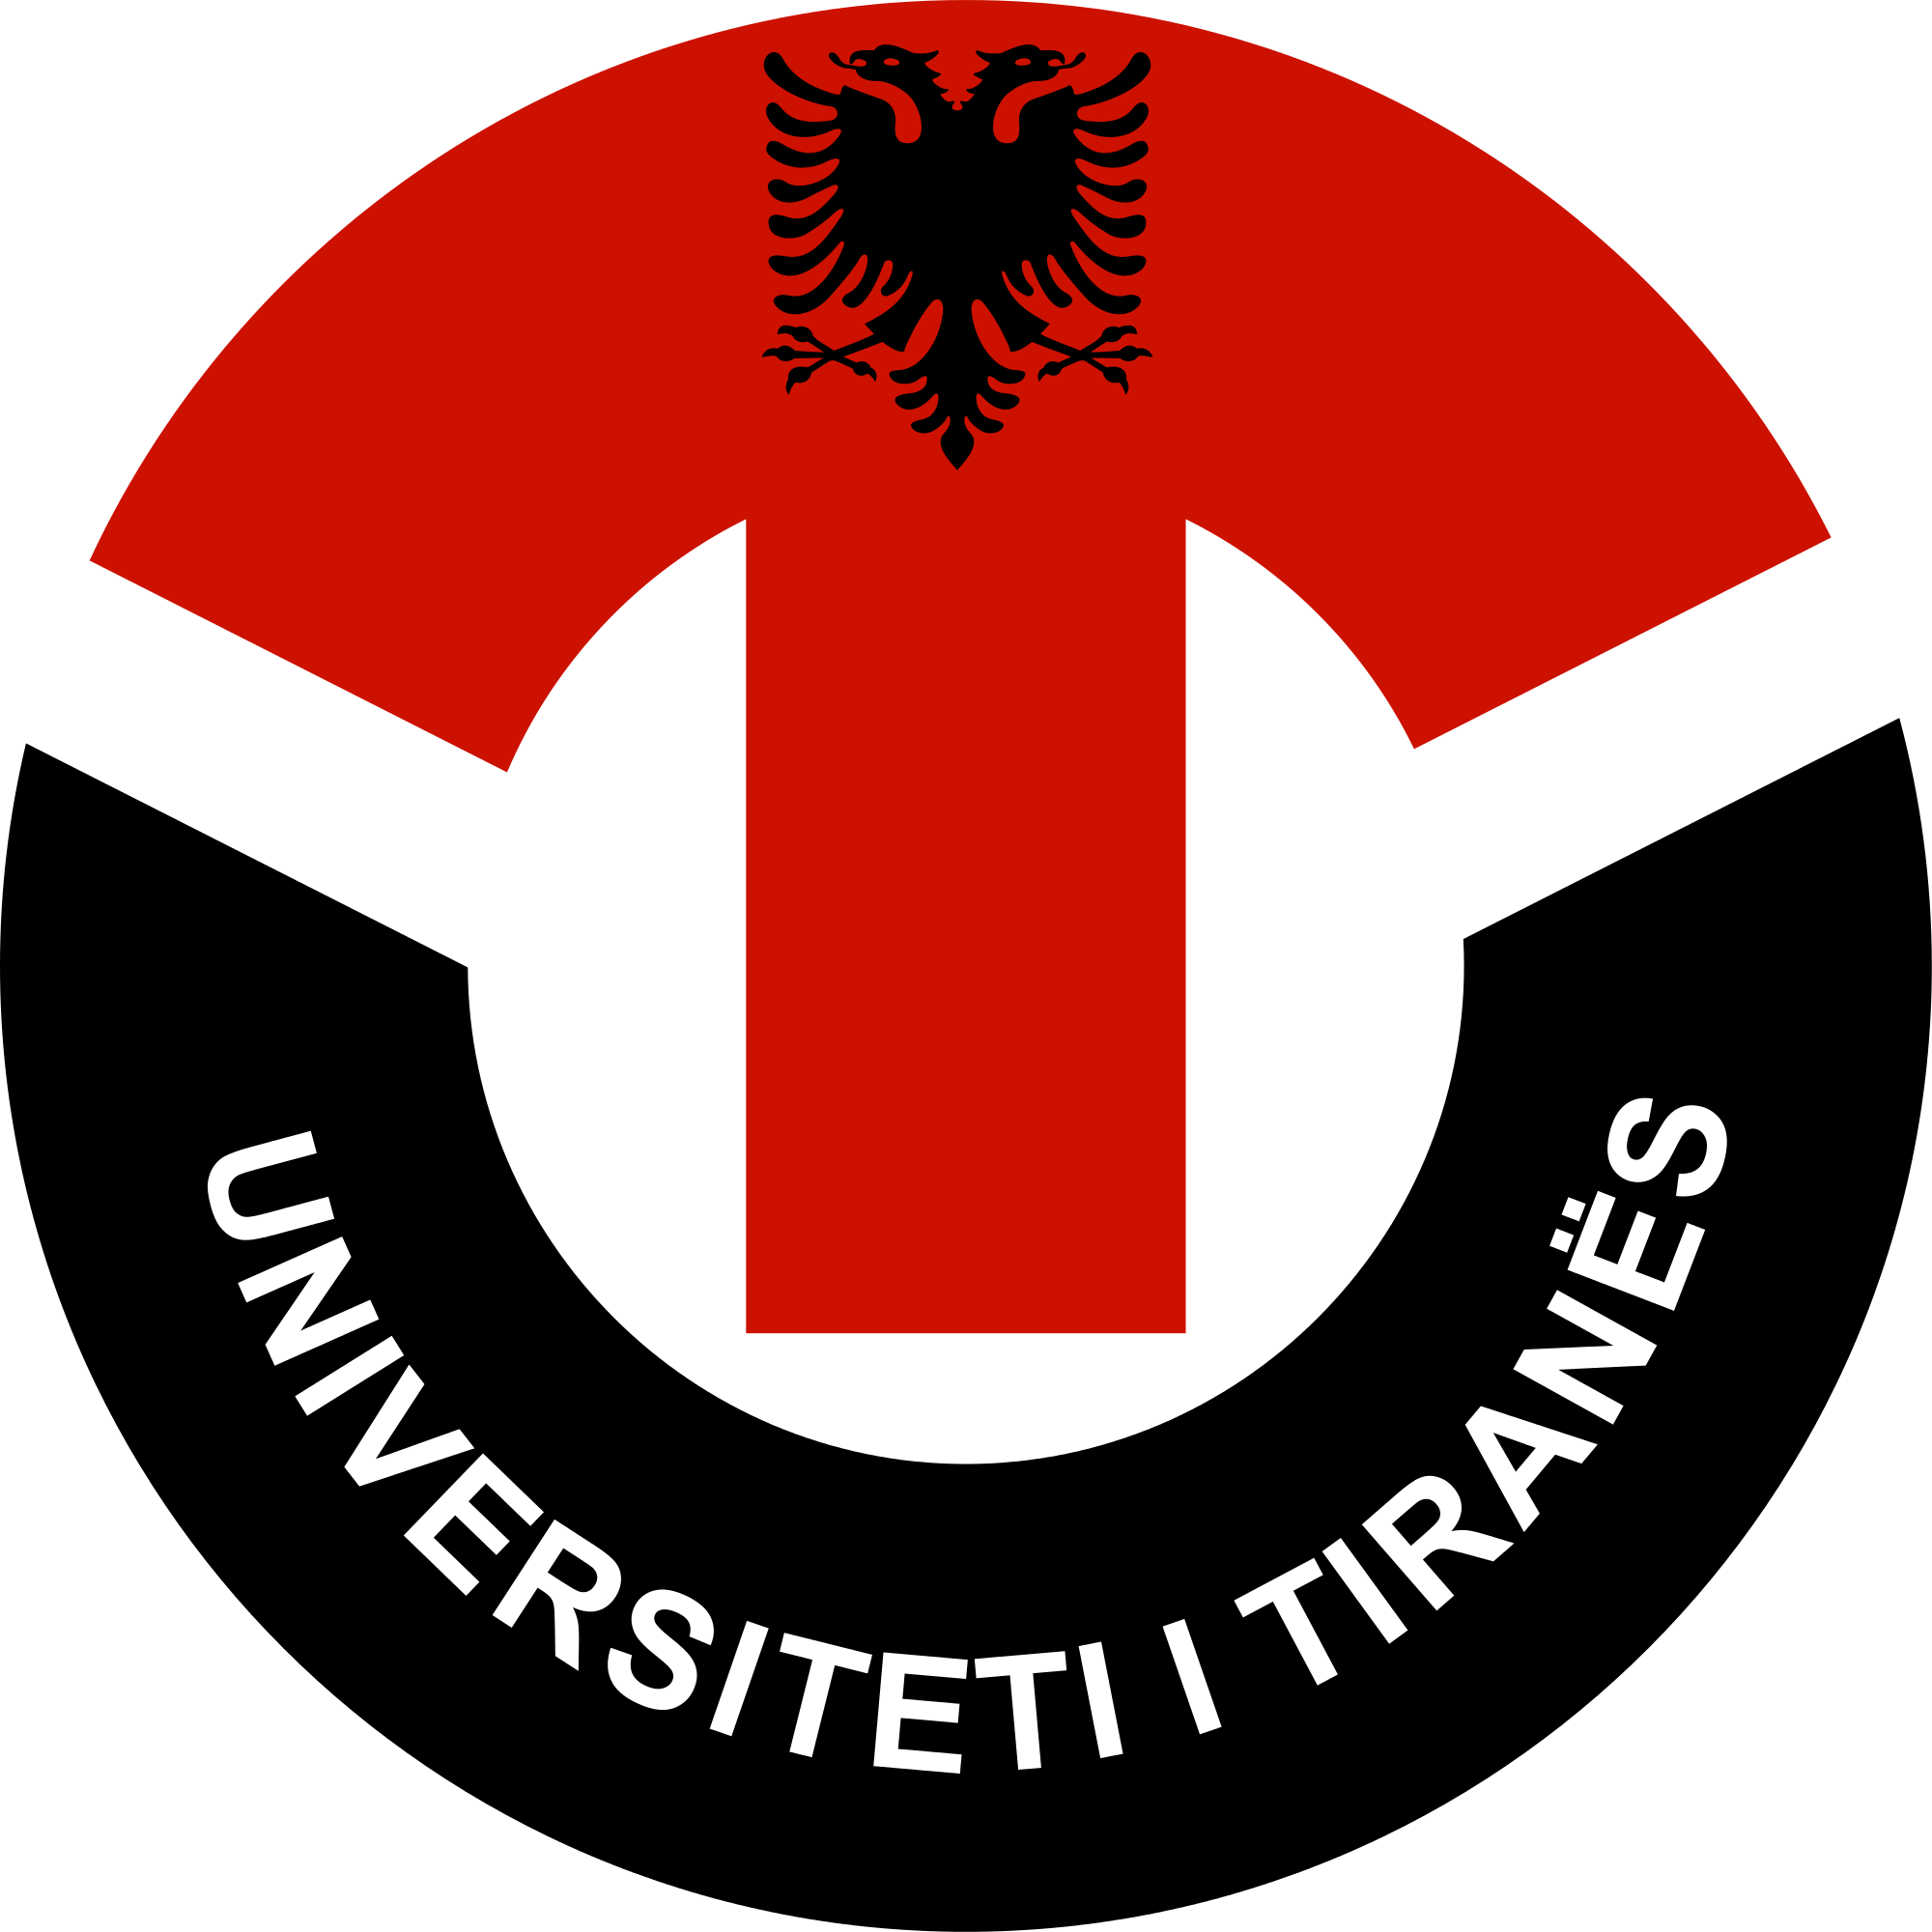 https://upload.wikimedia.org/wikipedia/commons/thumb/f/f2/university_of_tirana_logo.svg/2000px-university_of_tirana_logo.svg.png